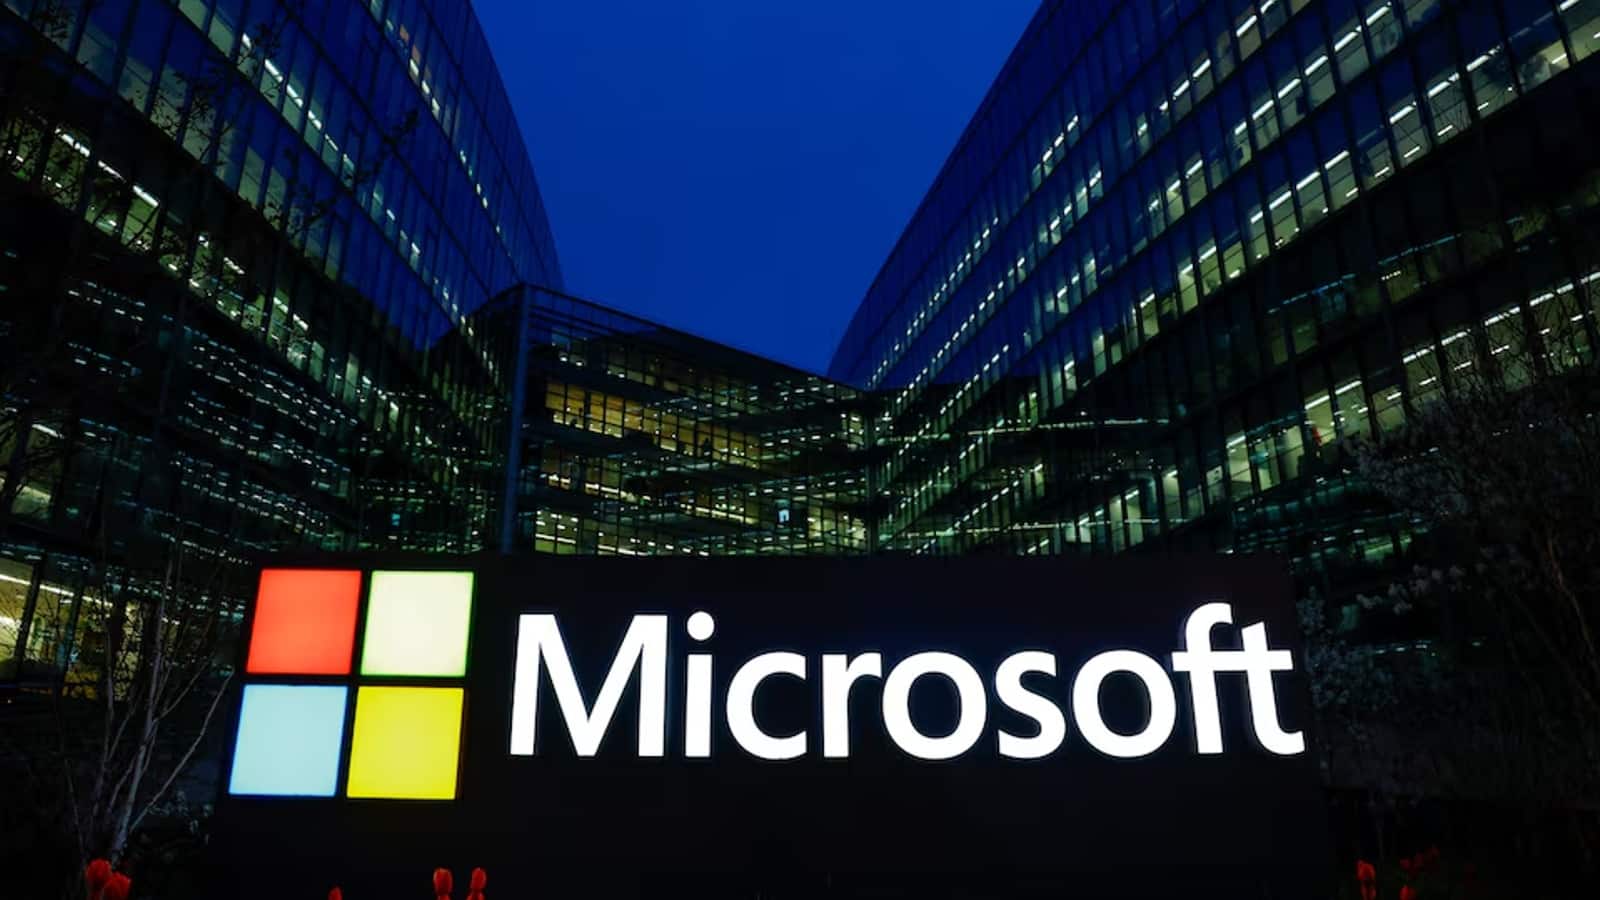 Microsoft under EU scrutiny for alleged children's data collection